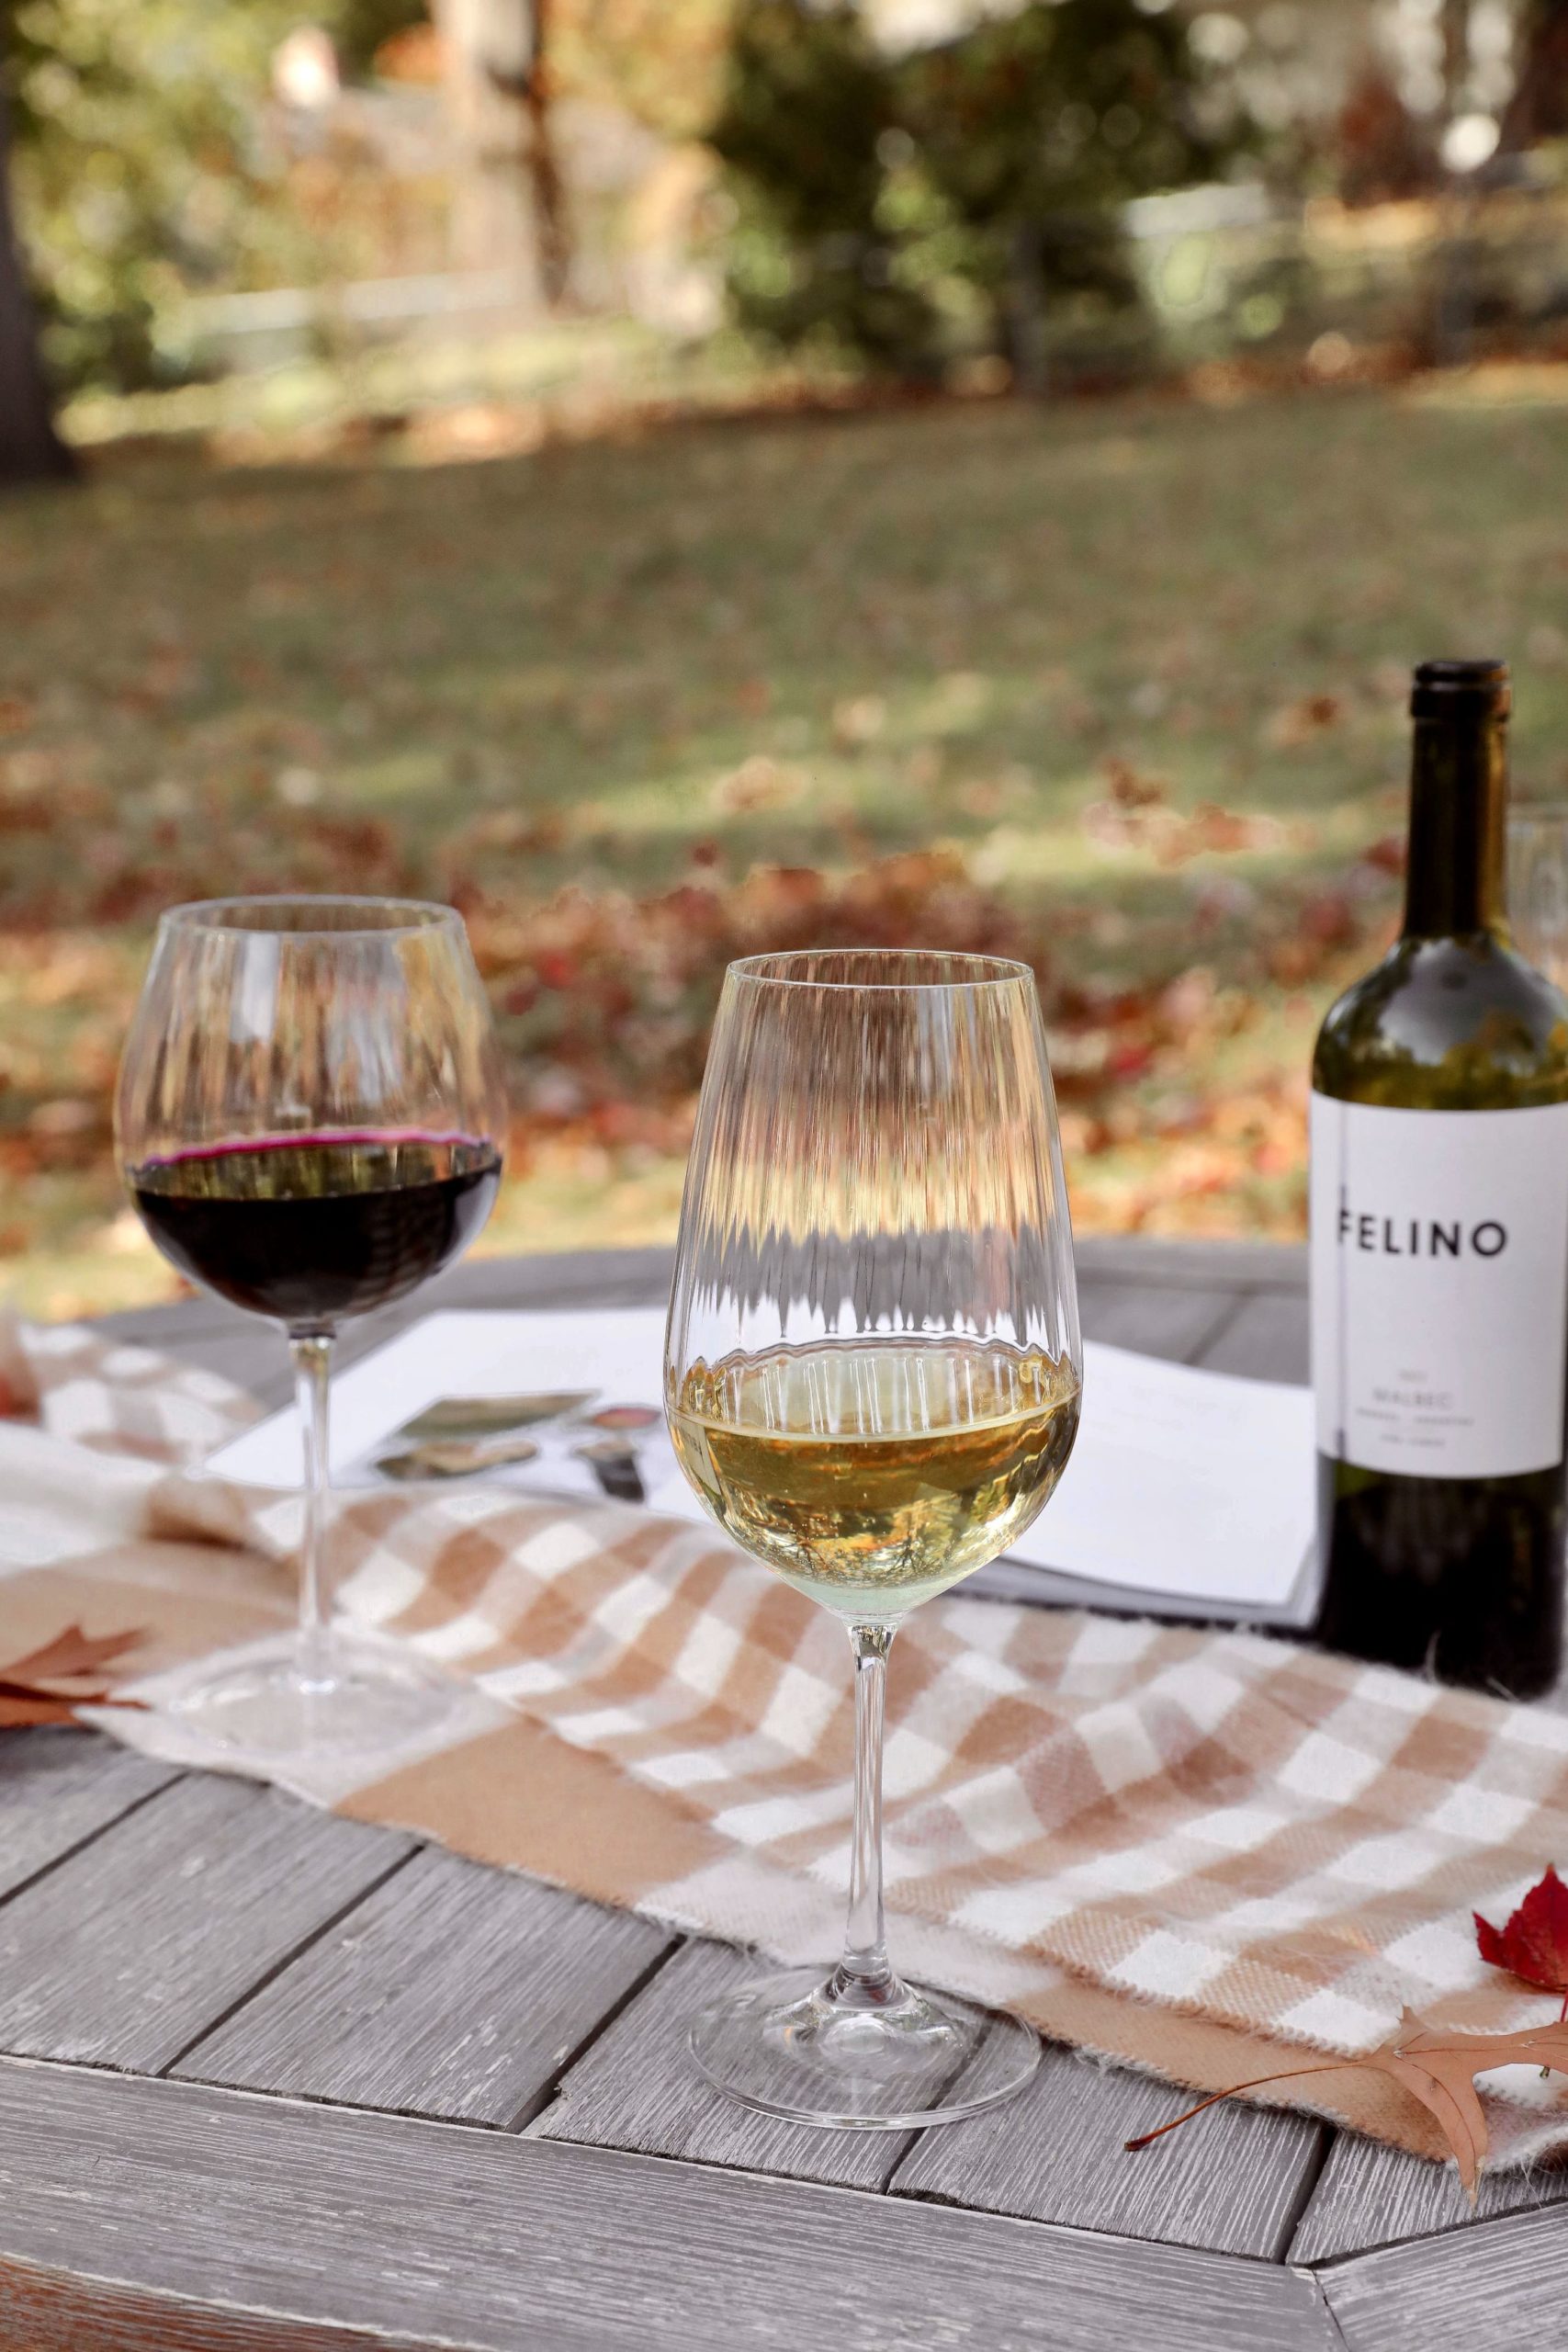 https://dailydoseofcharm.com/wp-content/uploads/2022/10/Ribbed-wine-glasses-red-white-fall-picnic-lauren-emily-lindmark-daily-dose-of-charm-4-scaled.jpg